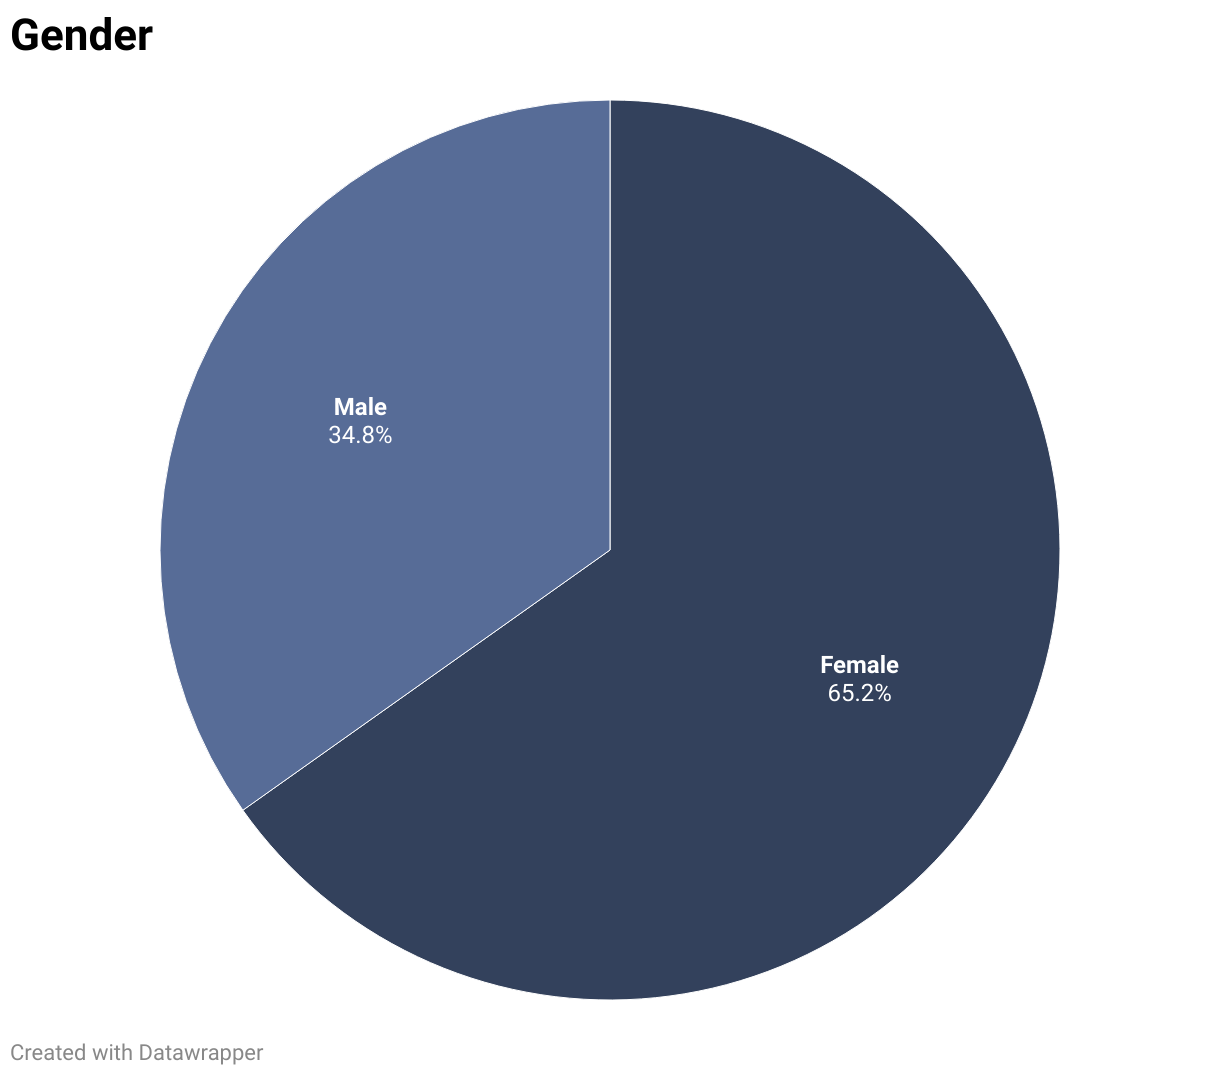 34.8% male, 65.2% female